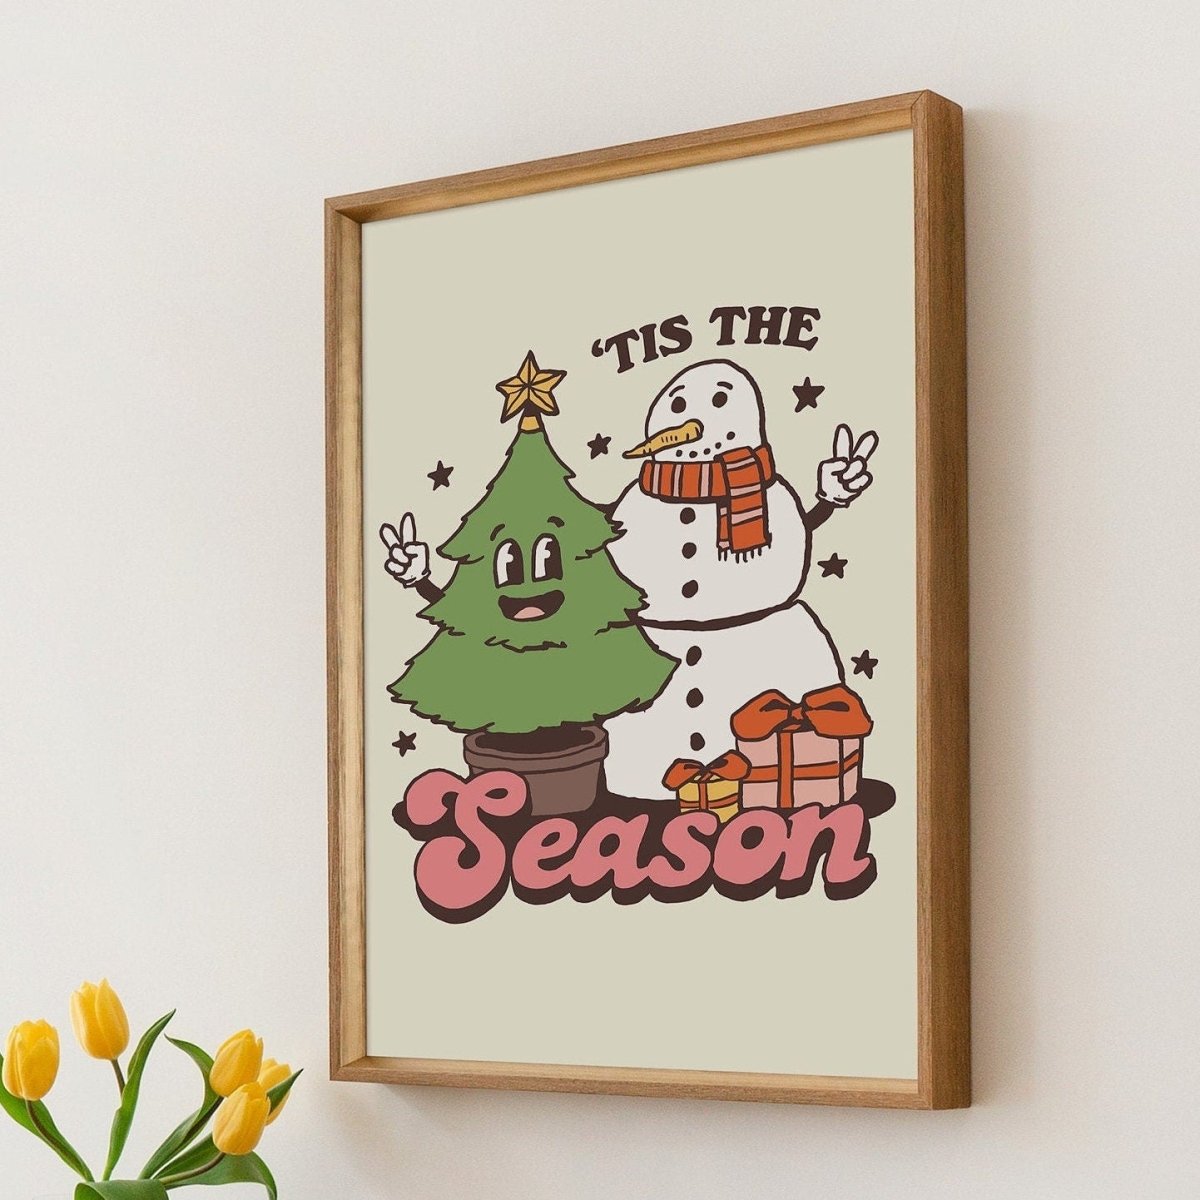 'Tis The Season' Snowman Christmas Decor - Art Prints - Kinder Planet Company